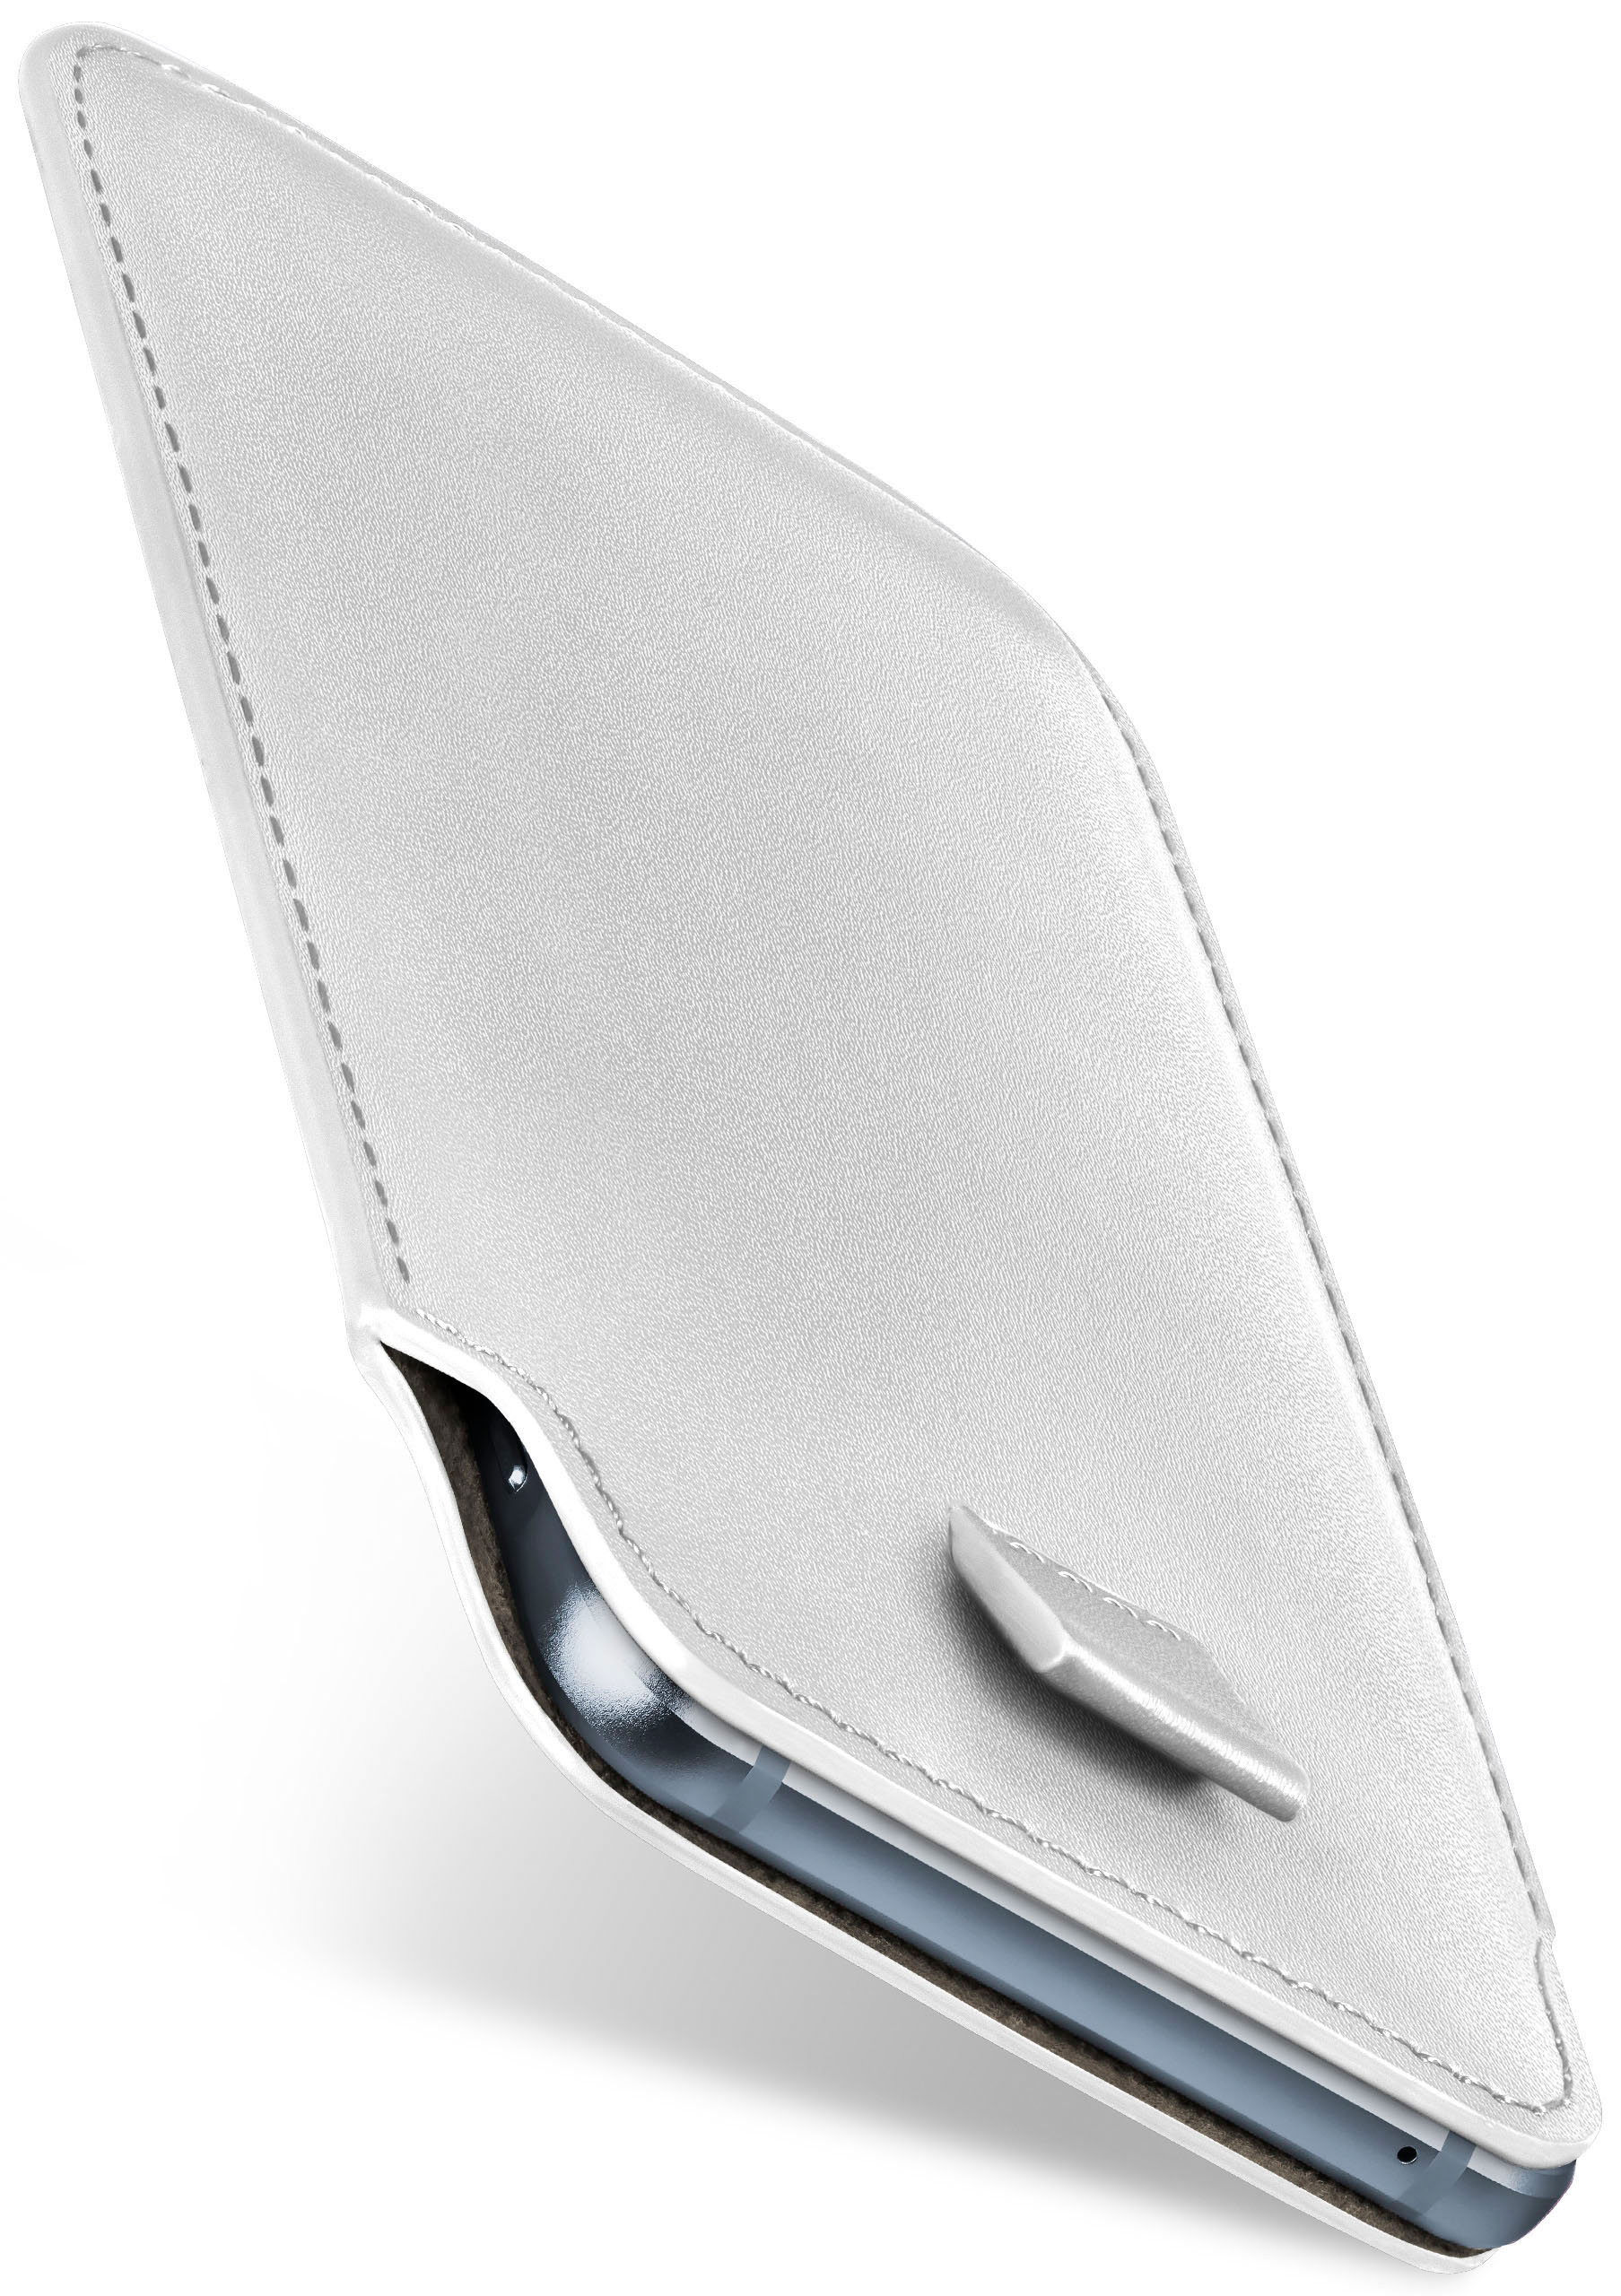 MOEX Nokia, Lumia Shiny-White 635, Full Case, / 630 Slide Cover,